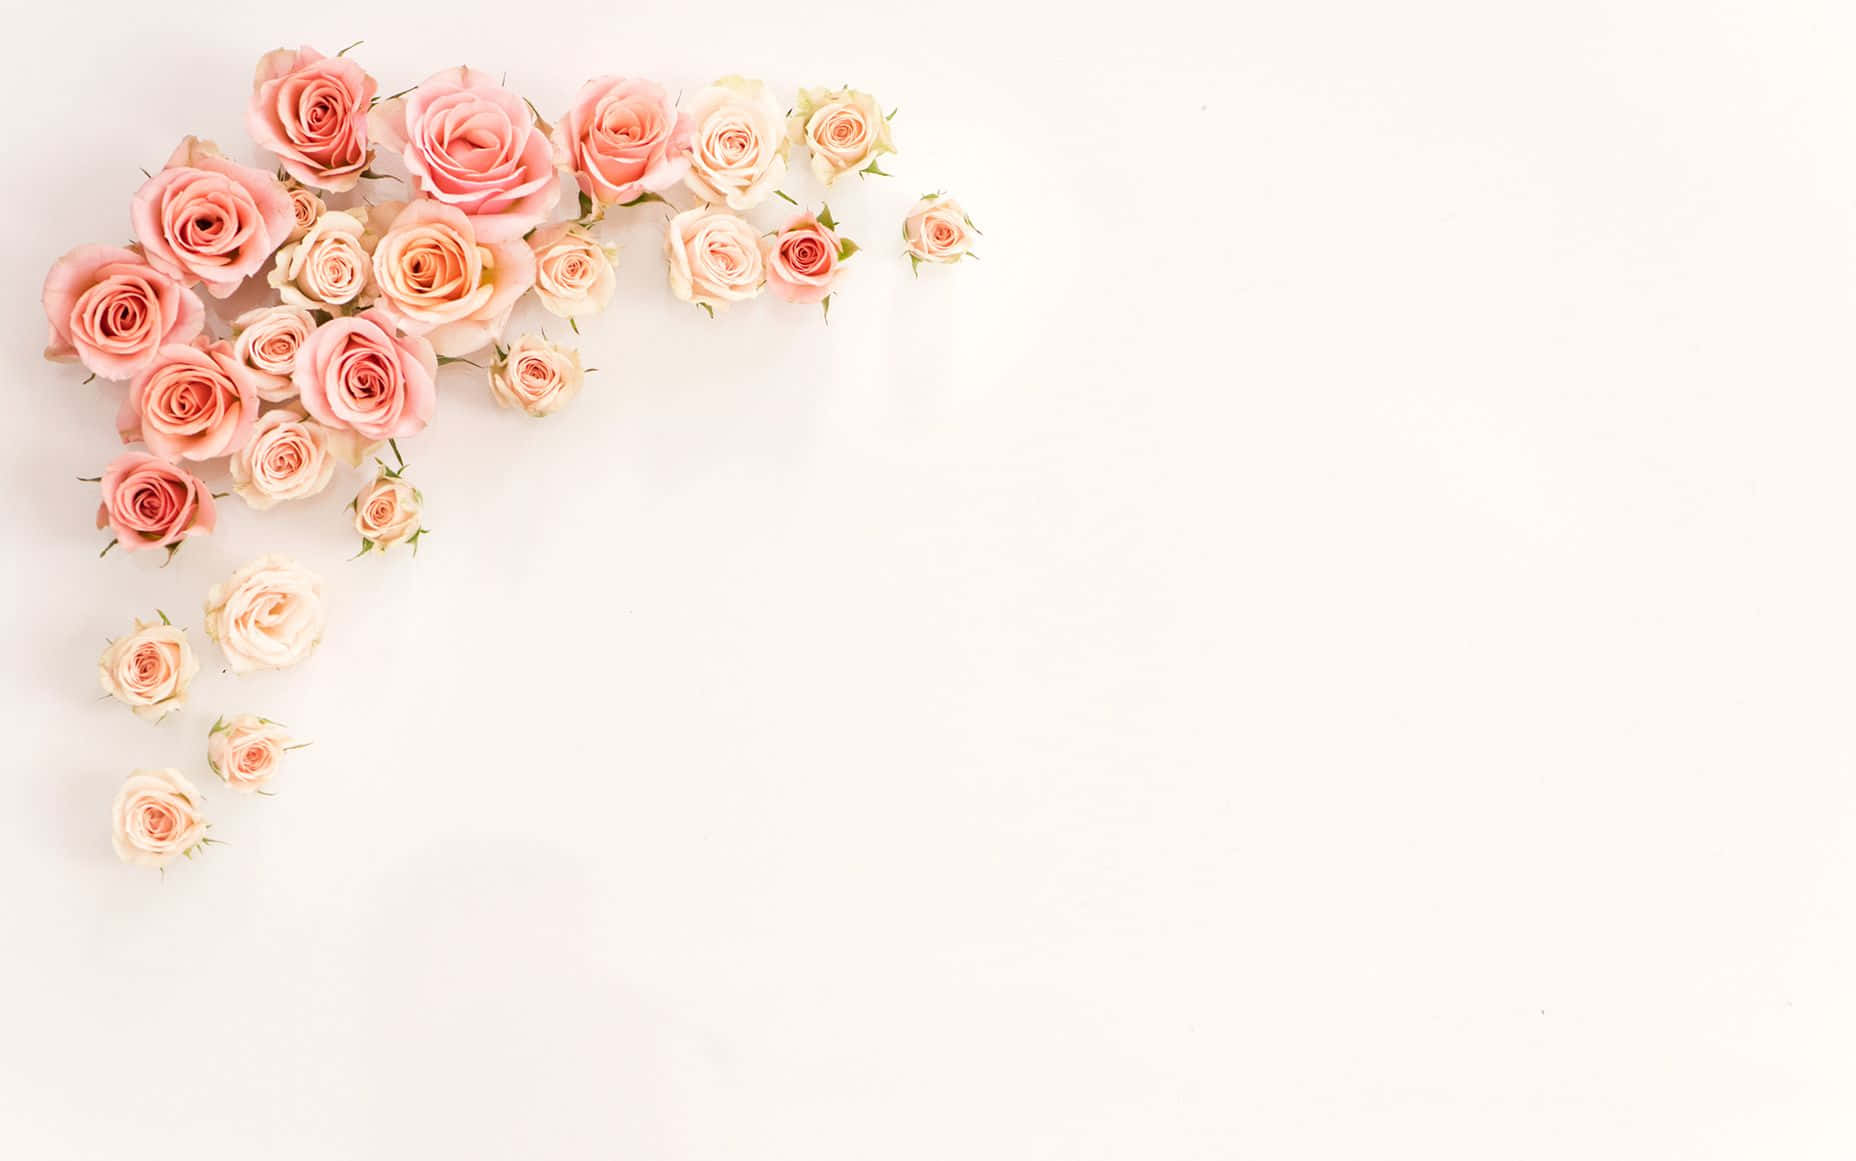 Elegant Aesthetic Rose Blooming in Vibrant Colors